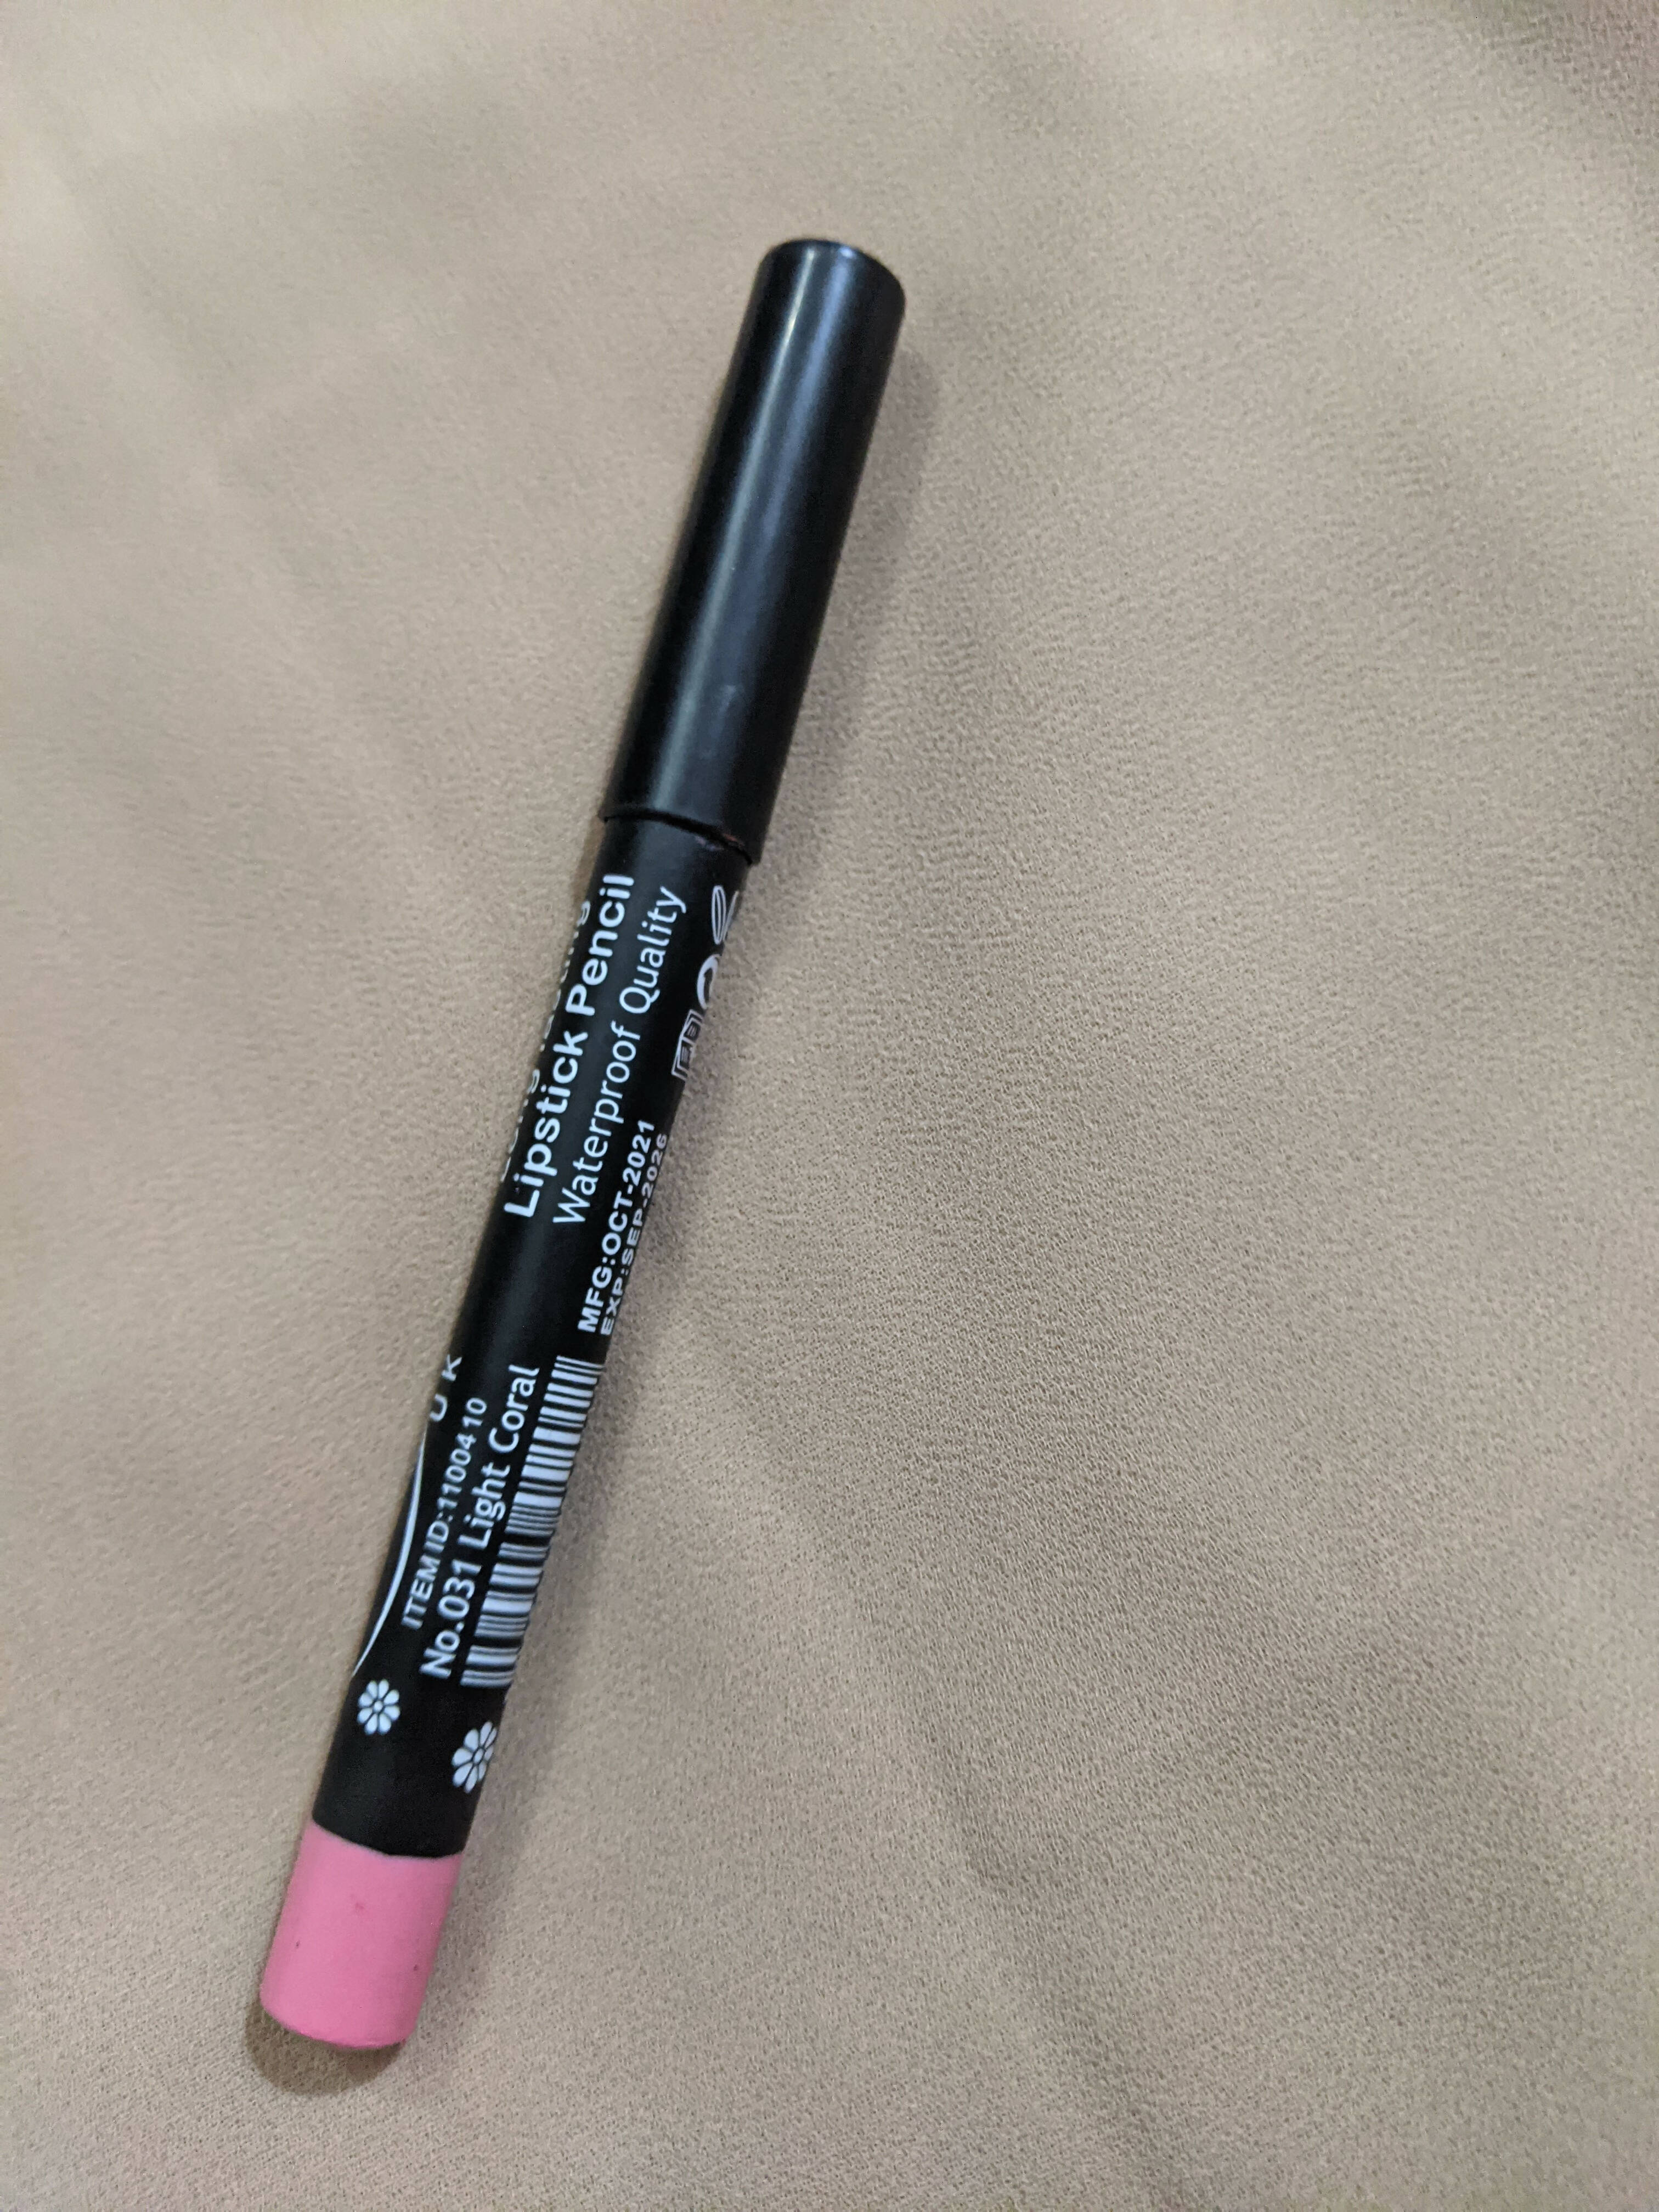 Rivag lip pencil Shade 031 light coral| Women Beauty Lips | New